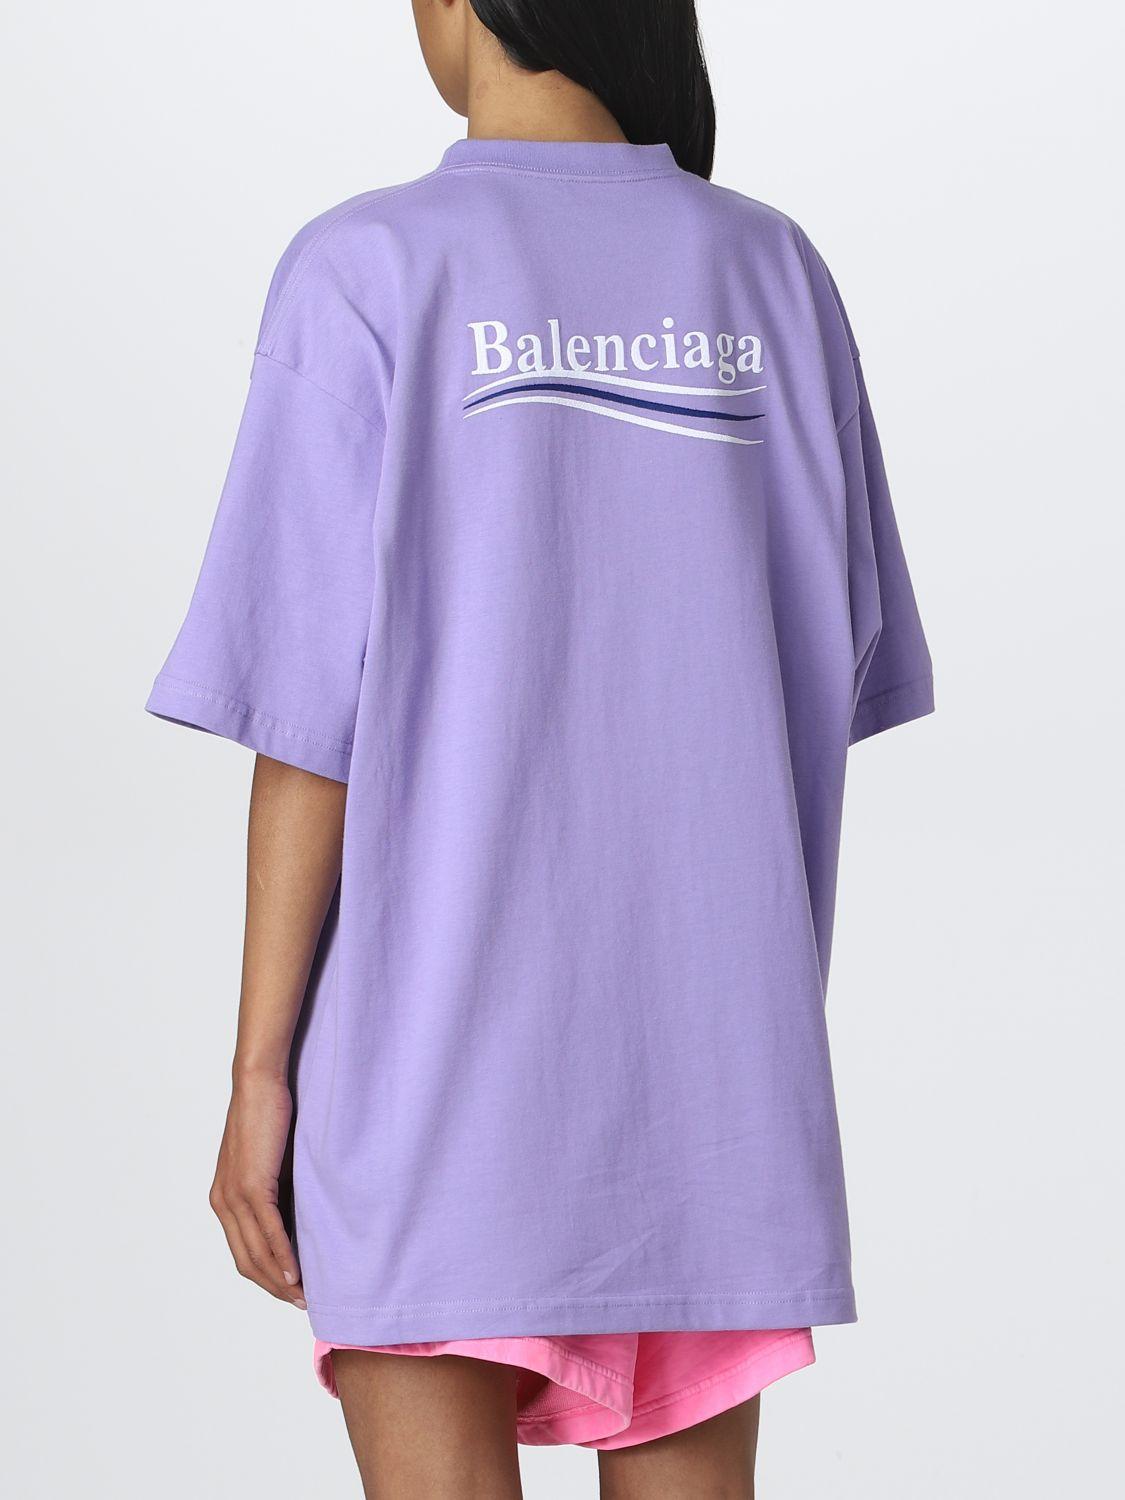 Balenciaga T-shirt in Purple | Lyst